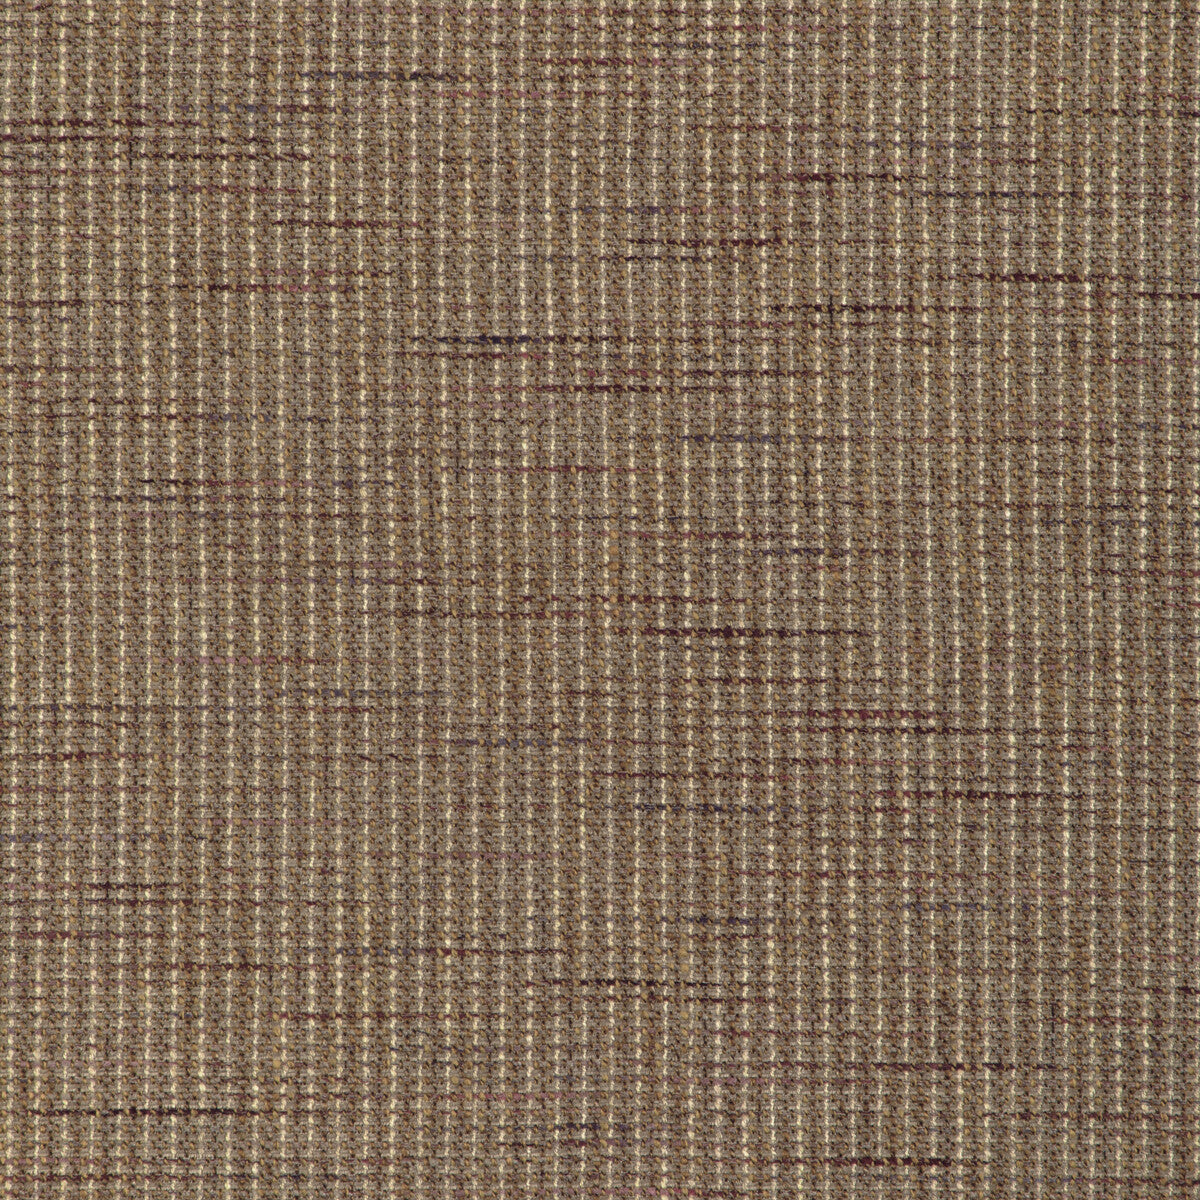 Kravet Smart fabric in 36669-624 color - pattern 36669.624.0 - by Kravet Smart in the Performance Kravetarmor collection